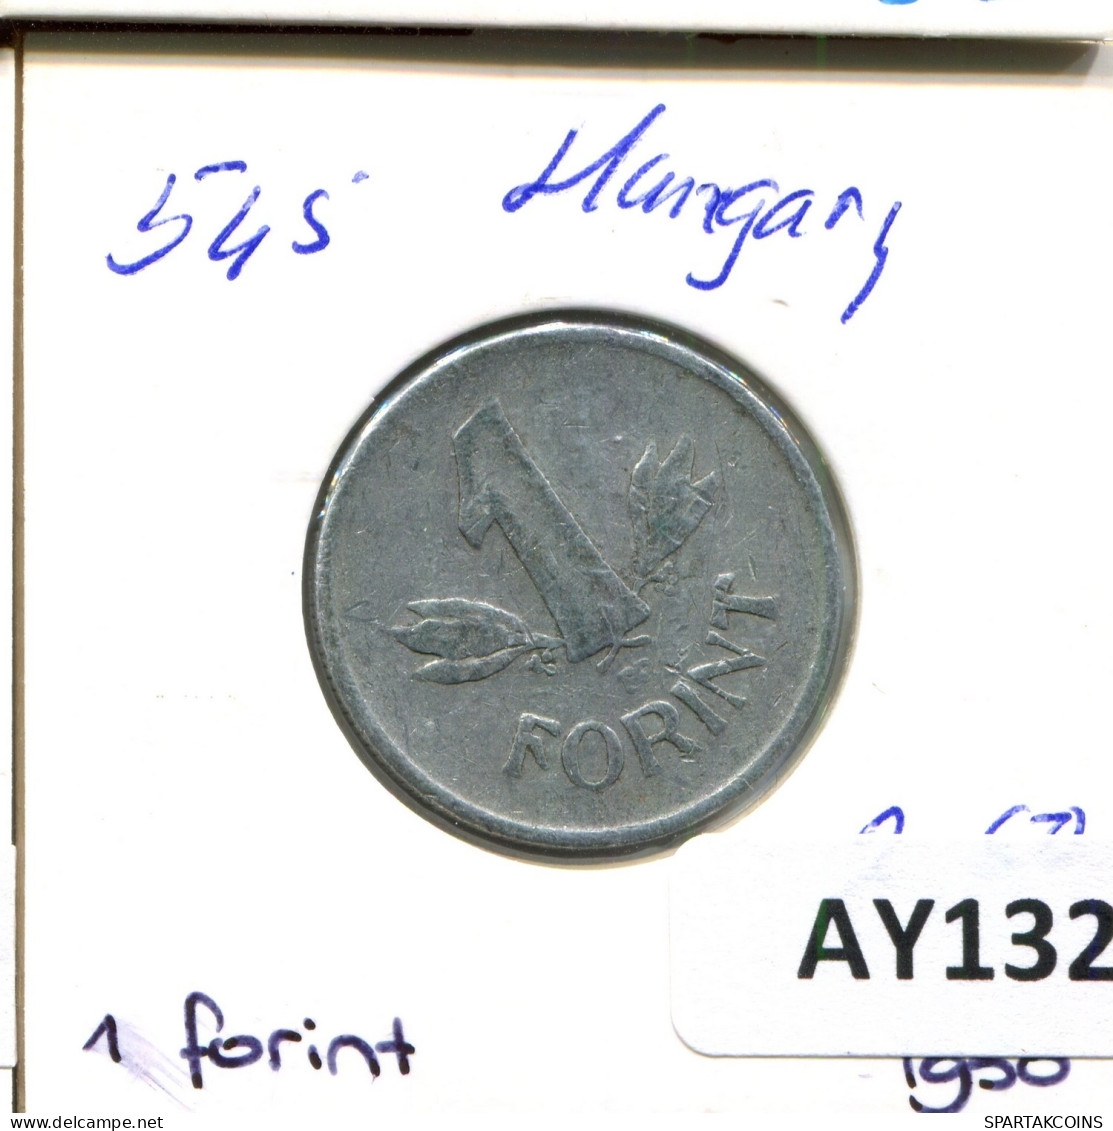 1 FORINT 1950 SIEBENBÜRGEN HUNGARY Münze #AY132.2.D.A - Hungría